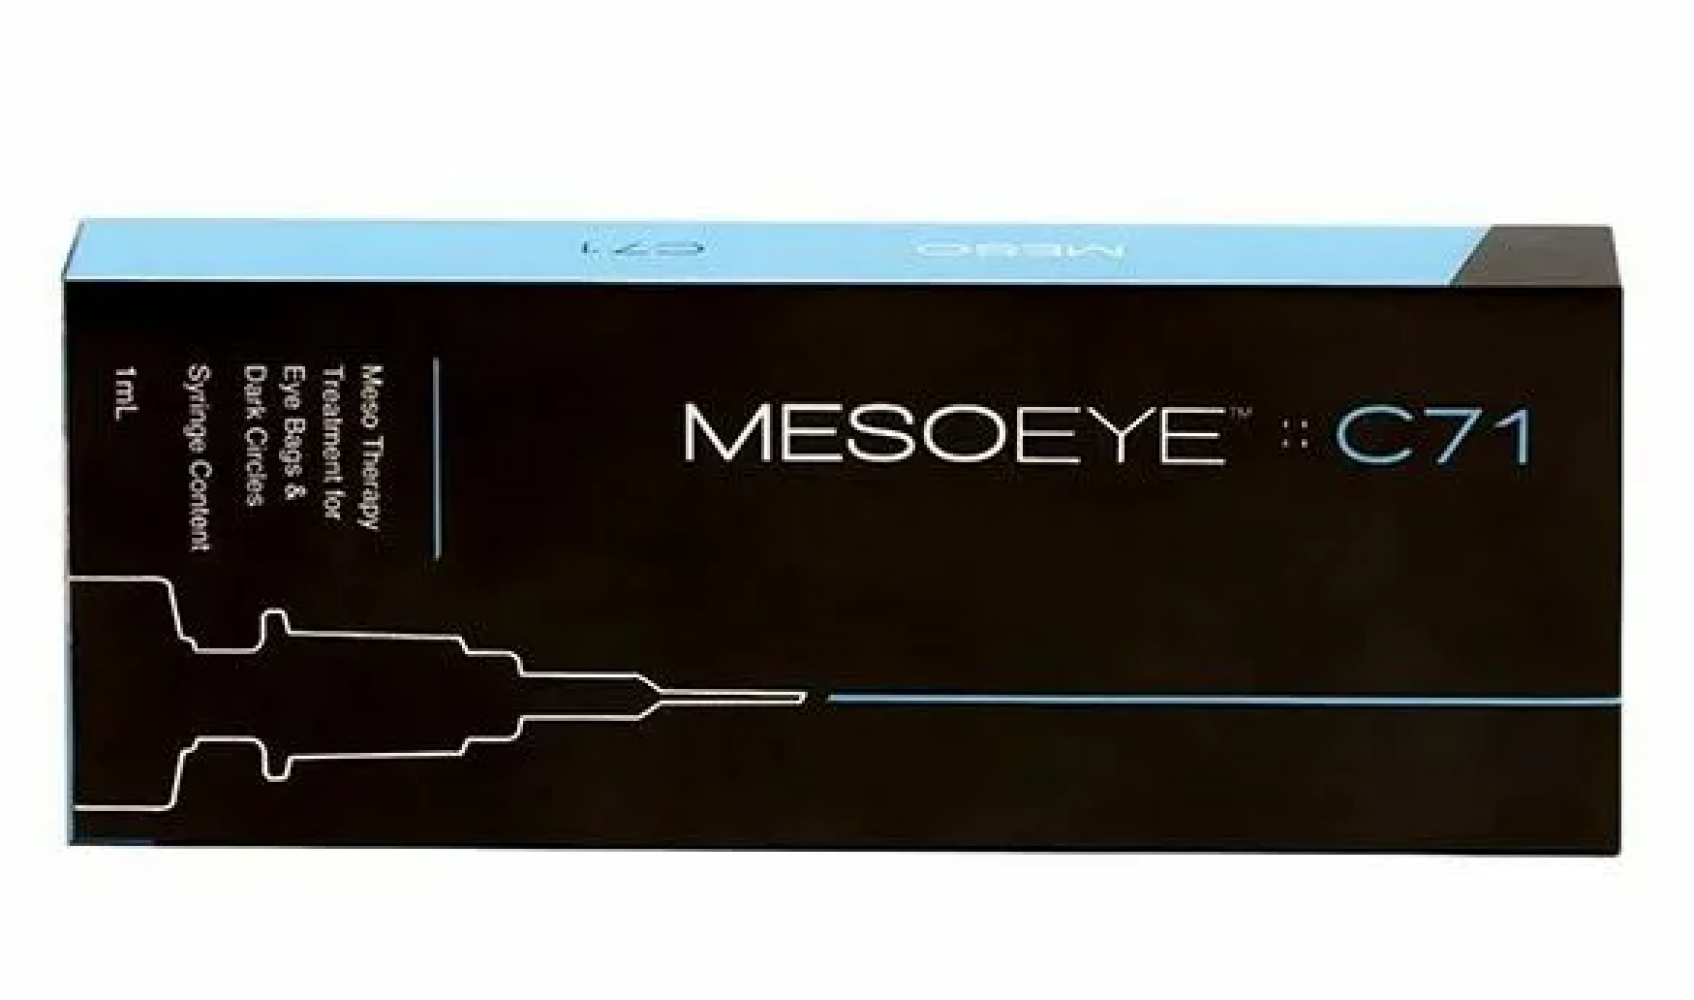 Meso eye. MESOEYE c71™. Meso Eye c 71 (1 мл). Препарат MESOEYE с71. Meso-Eye c71 1,0 ml.